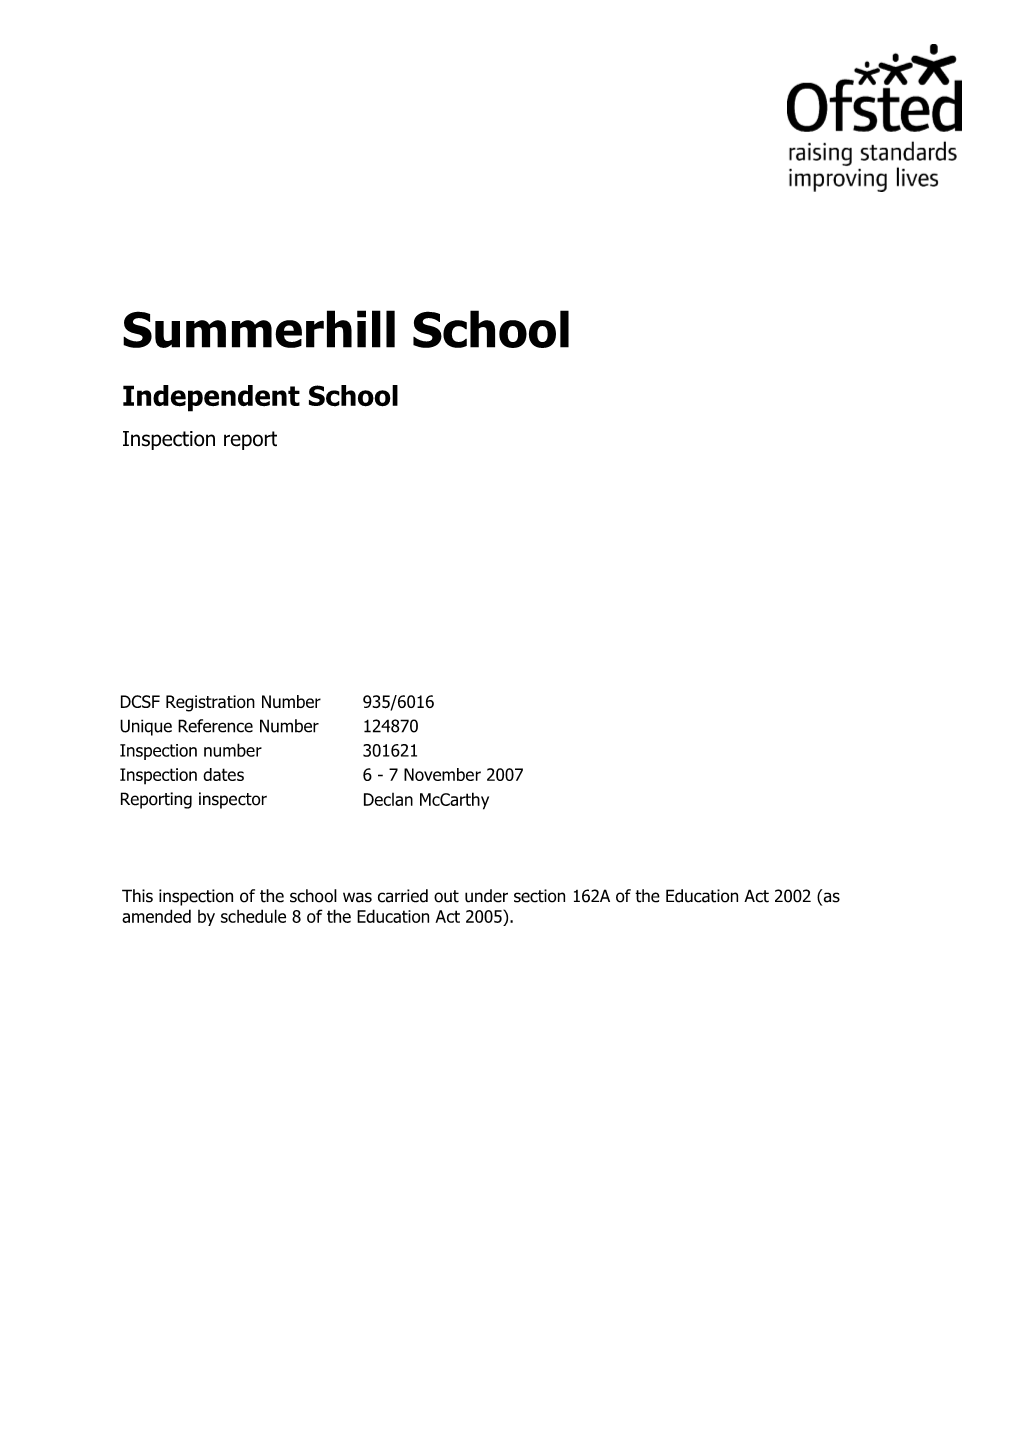 Inspection Report: Summerhill School